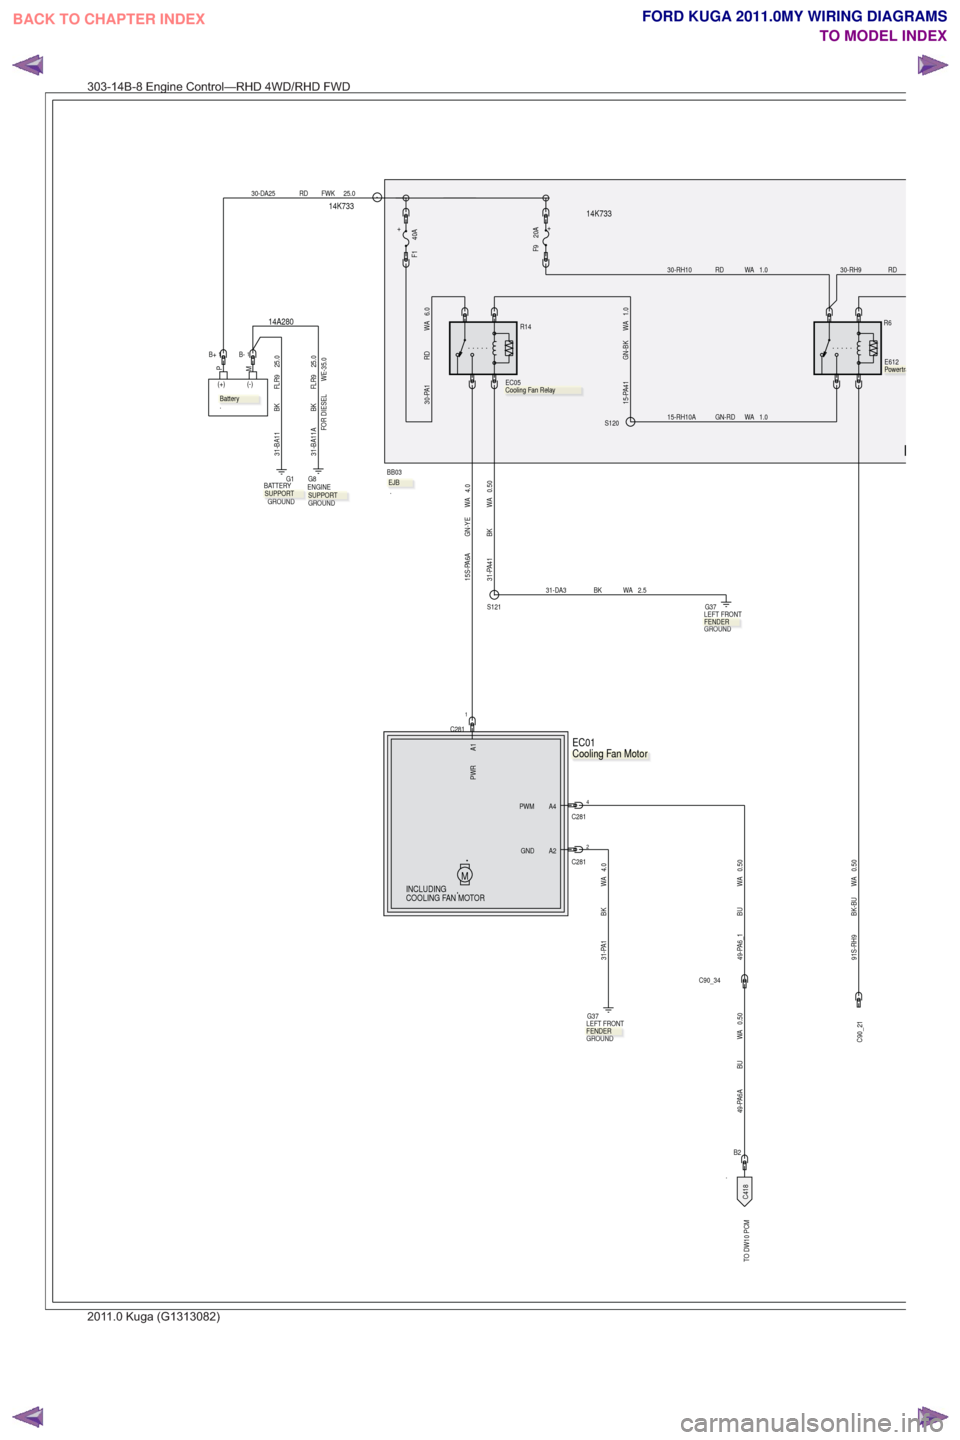 FORD KUGA 2011 1.G Wiring Diagram Workshop Manual .
TO DW10 PCM
14K73314K733
14A280
WE-35.0
FOR DIESEL
F
4.0
WA
BK
31-PA1
C281
4
0.50
WA
BU
49-PA6_1
A4
PWM
A2
GND
PWR A1
INCLUDING
COOLING FAN MOTORM
EC01.
25.0
FWK
RD
30-DA25
PM
(+) (-)
.
B+11B-
GROUN